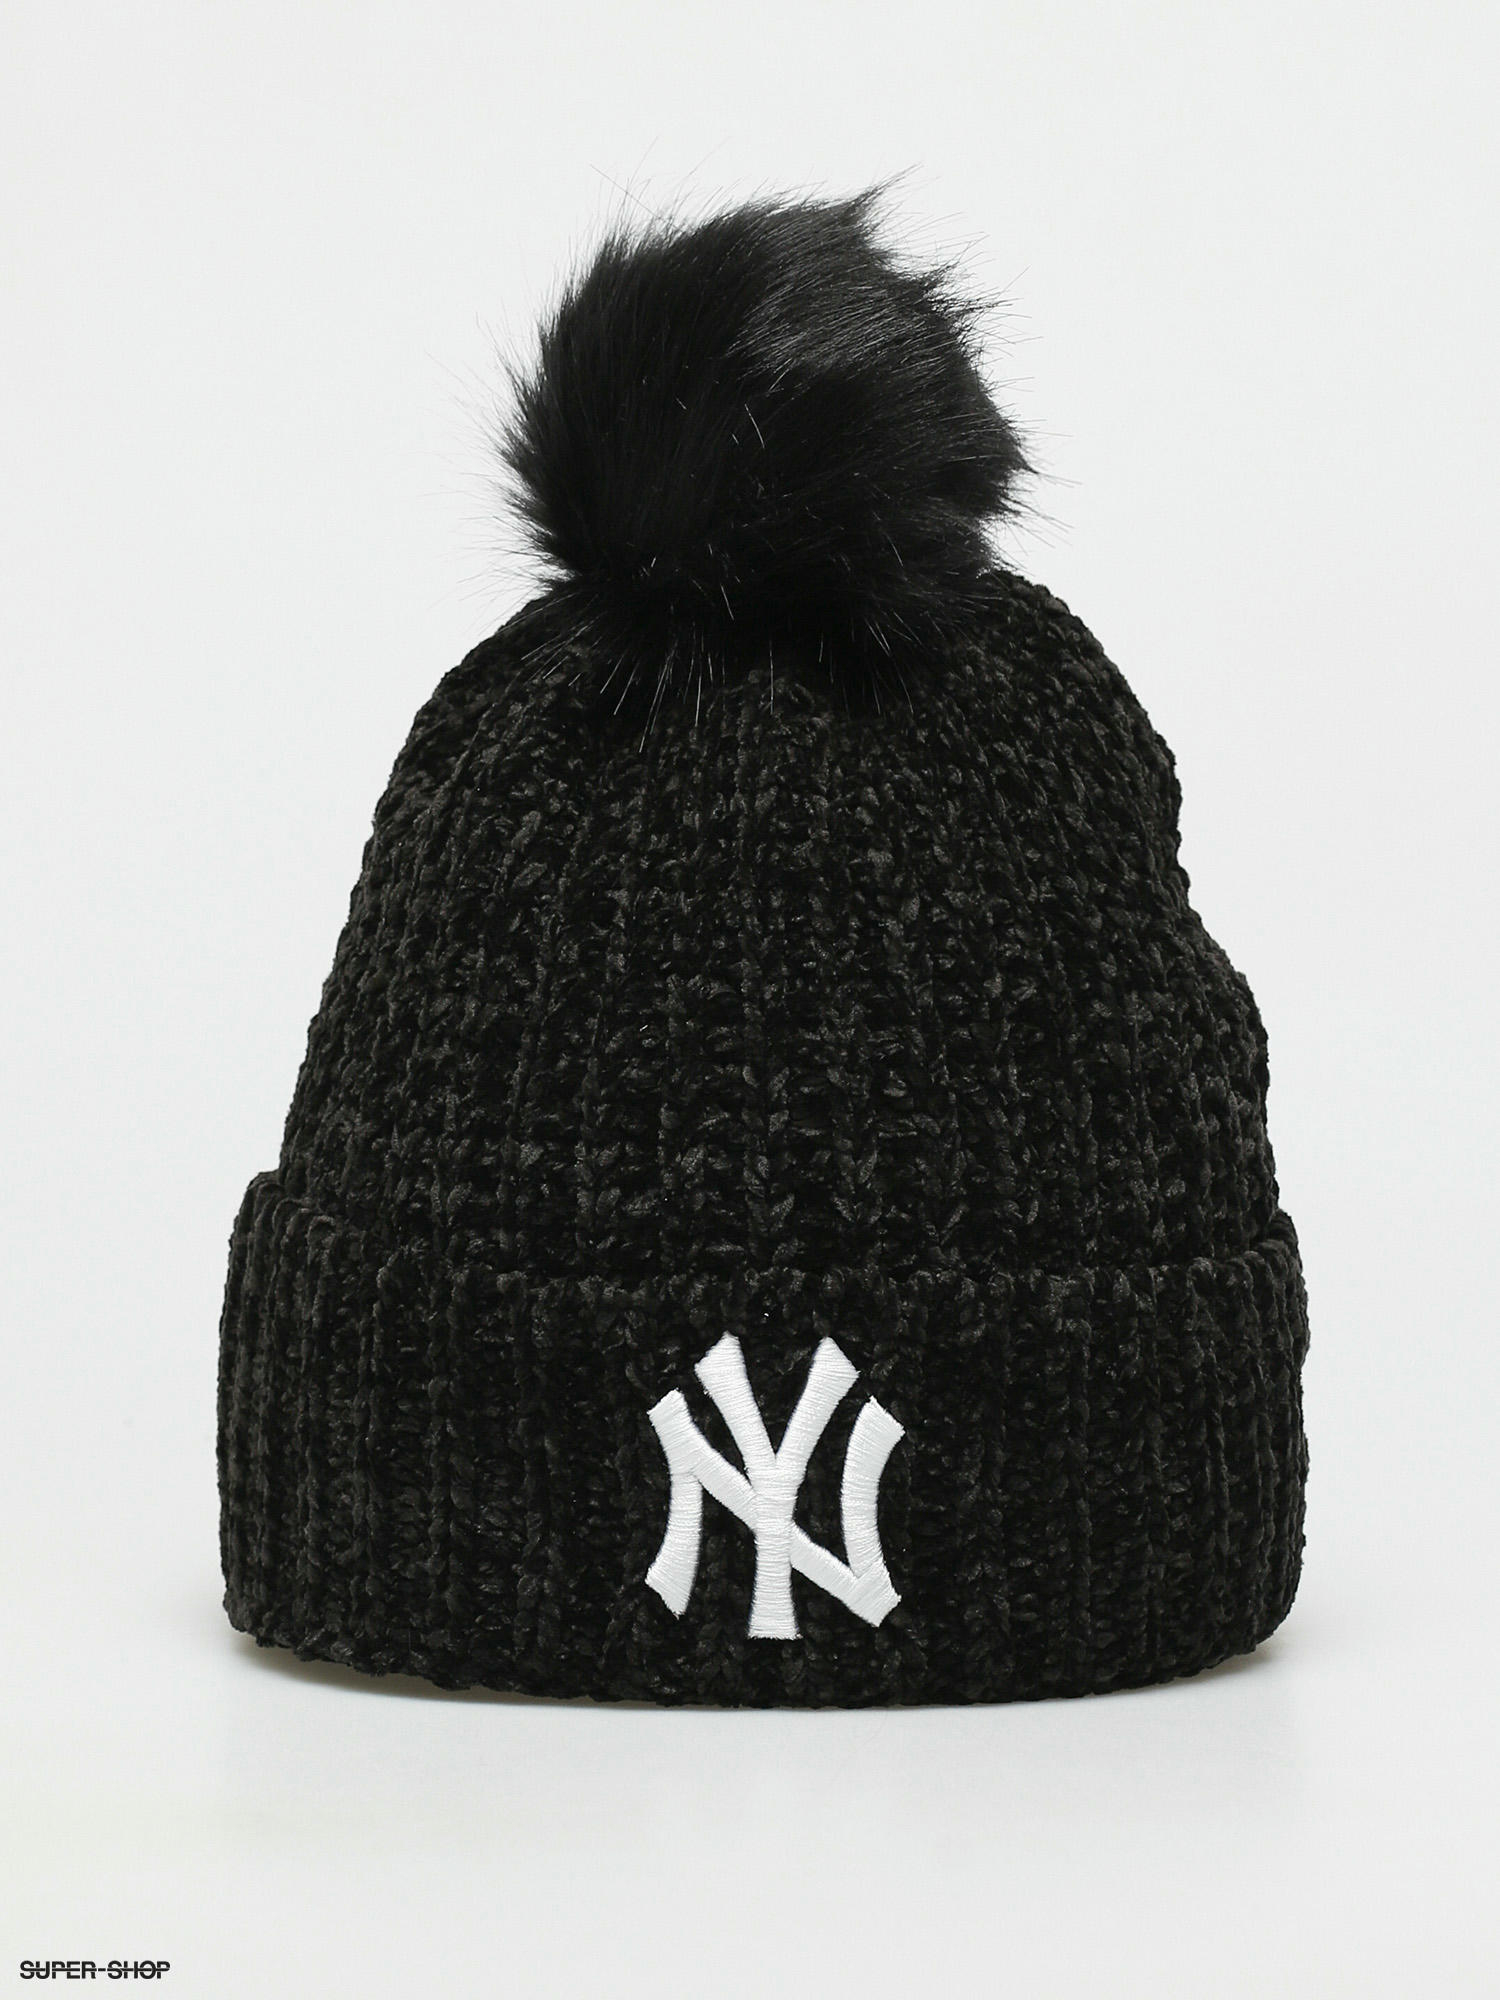 New Era Womens Winterized Bobble New York Yankees Beanie Wmn (black/white)